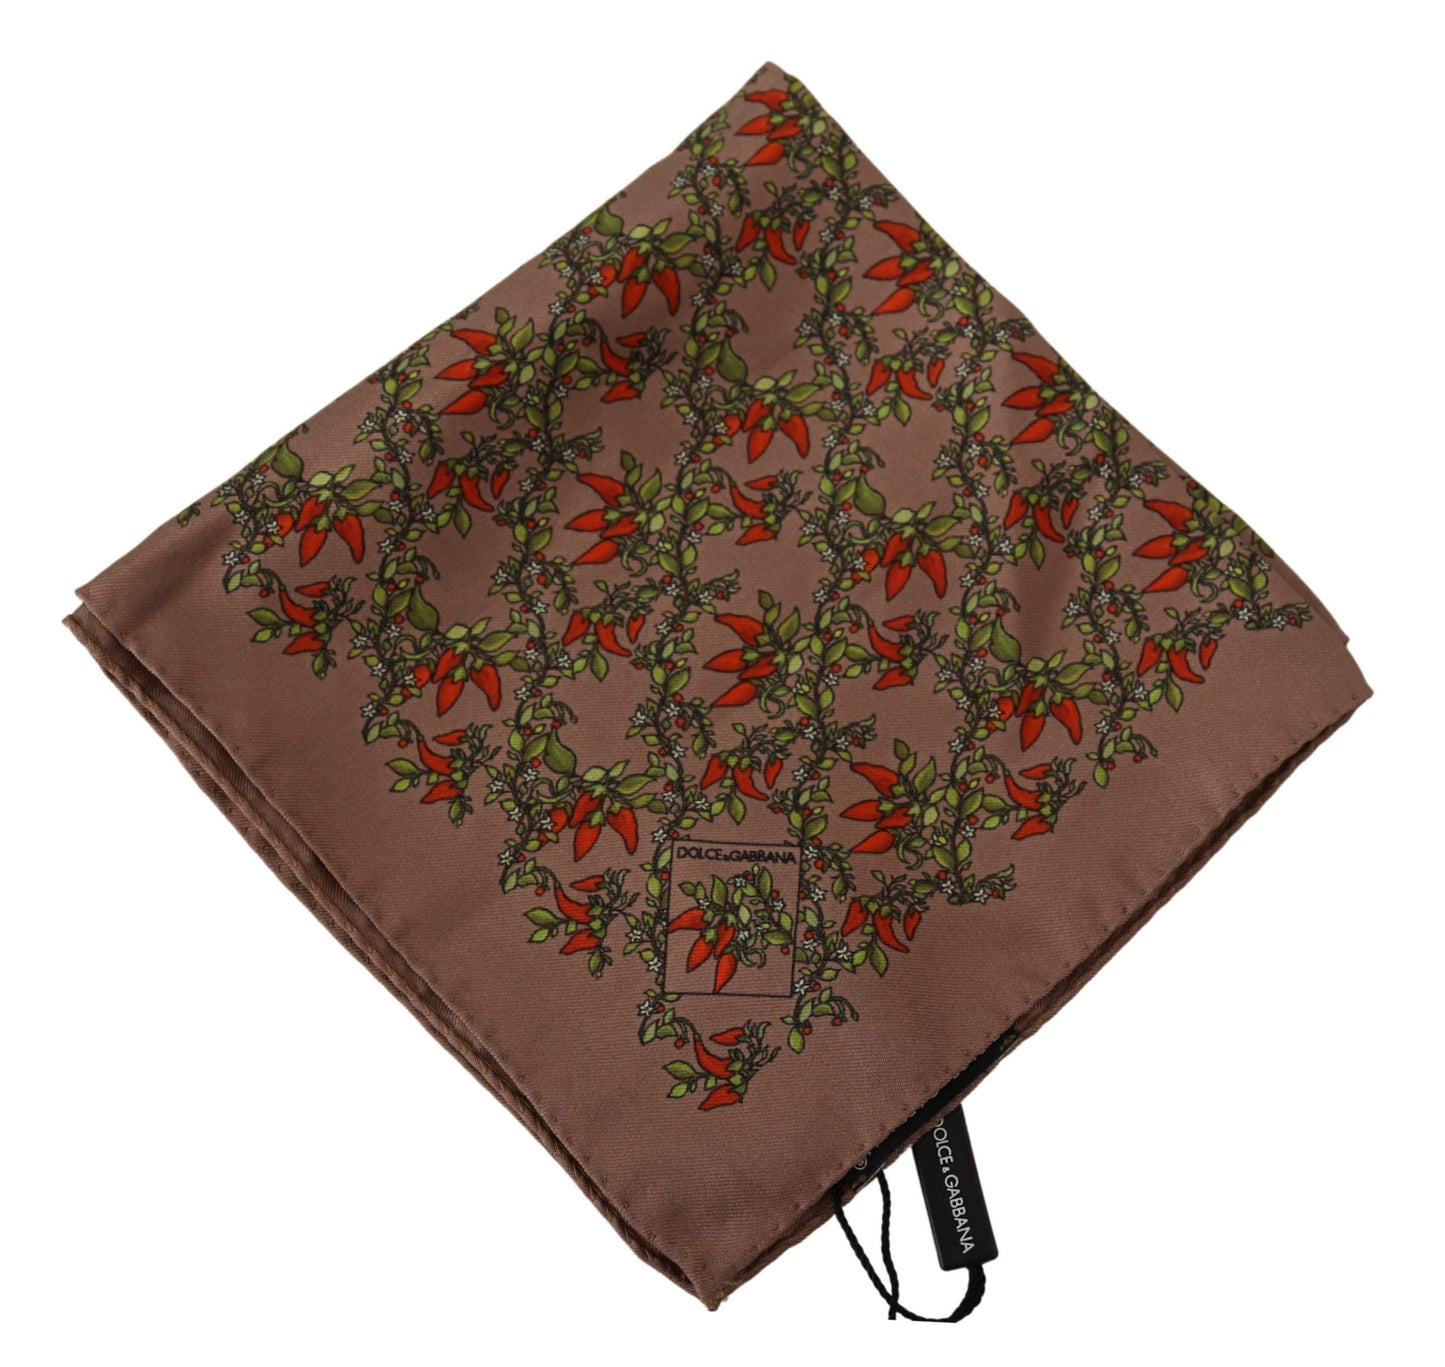 Brown Carrots Print Silk Handkerchief